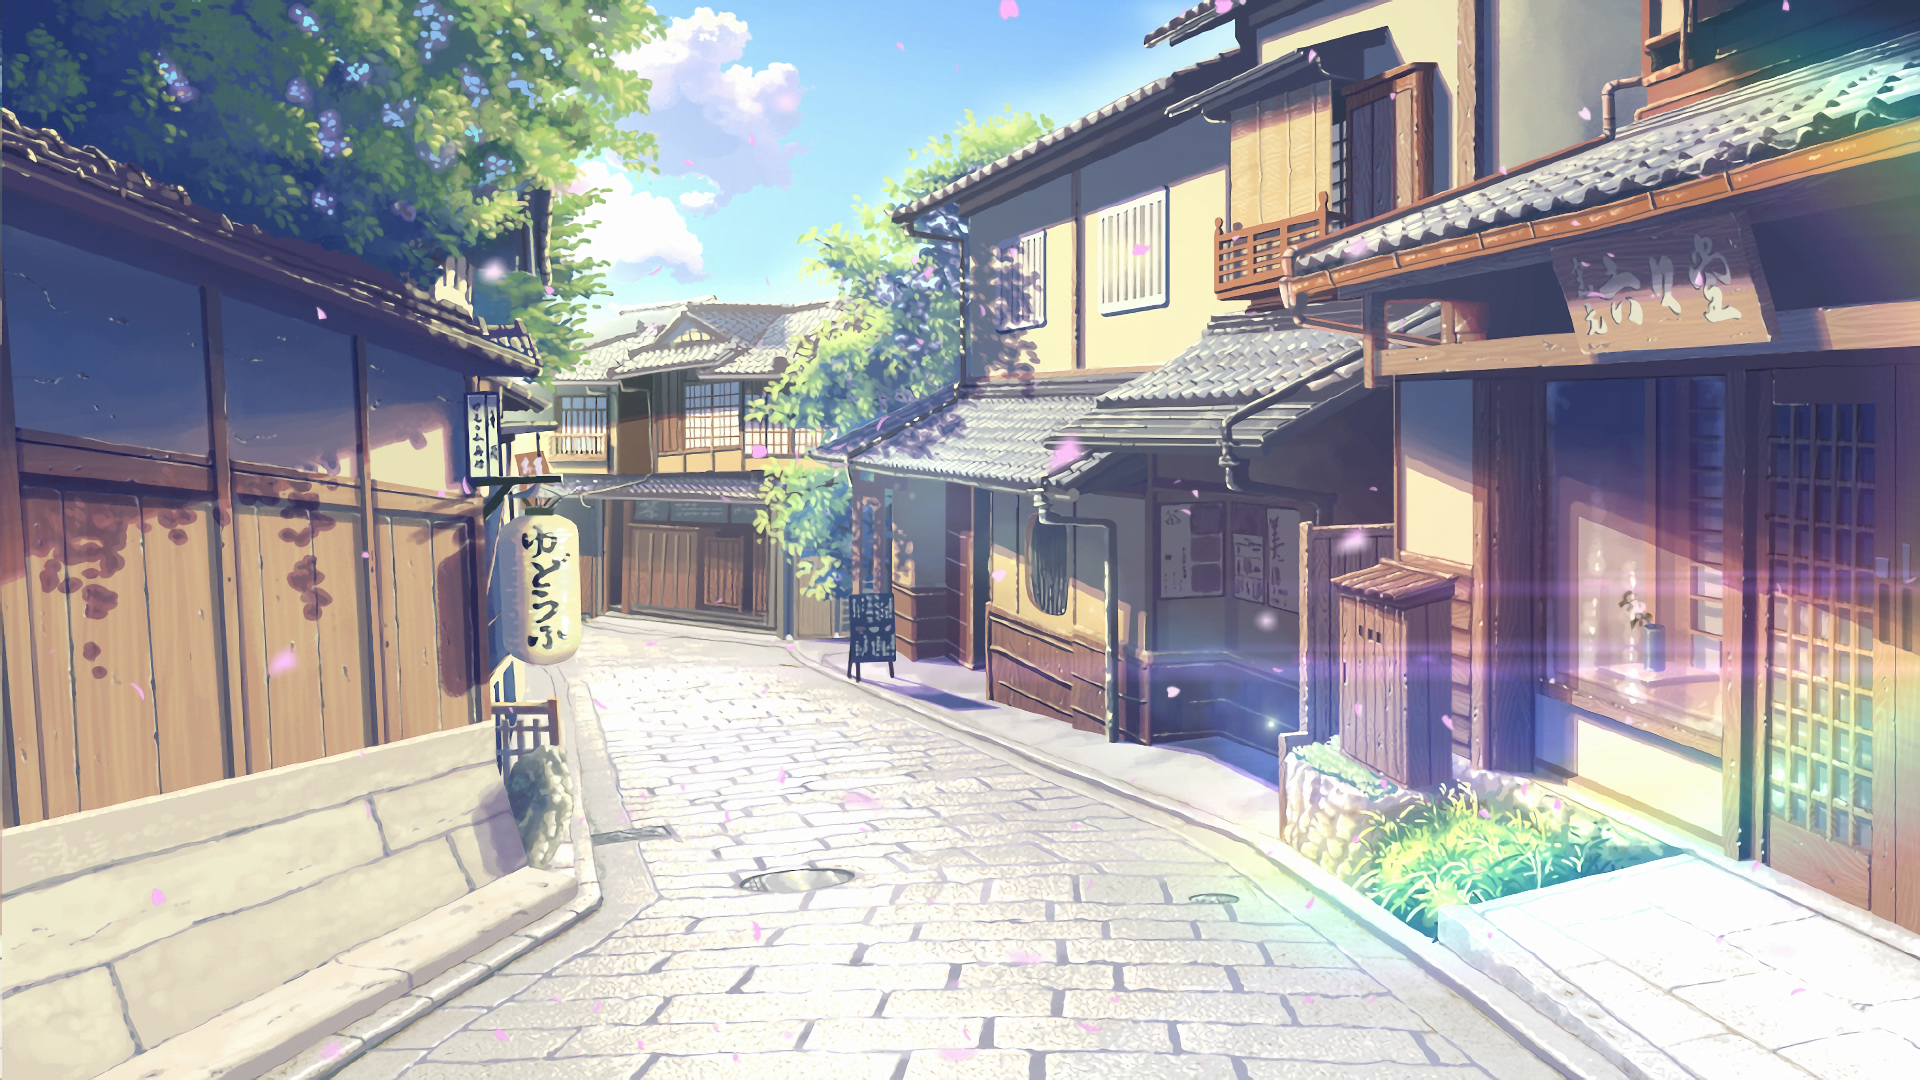 Japan street in anime style